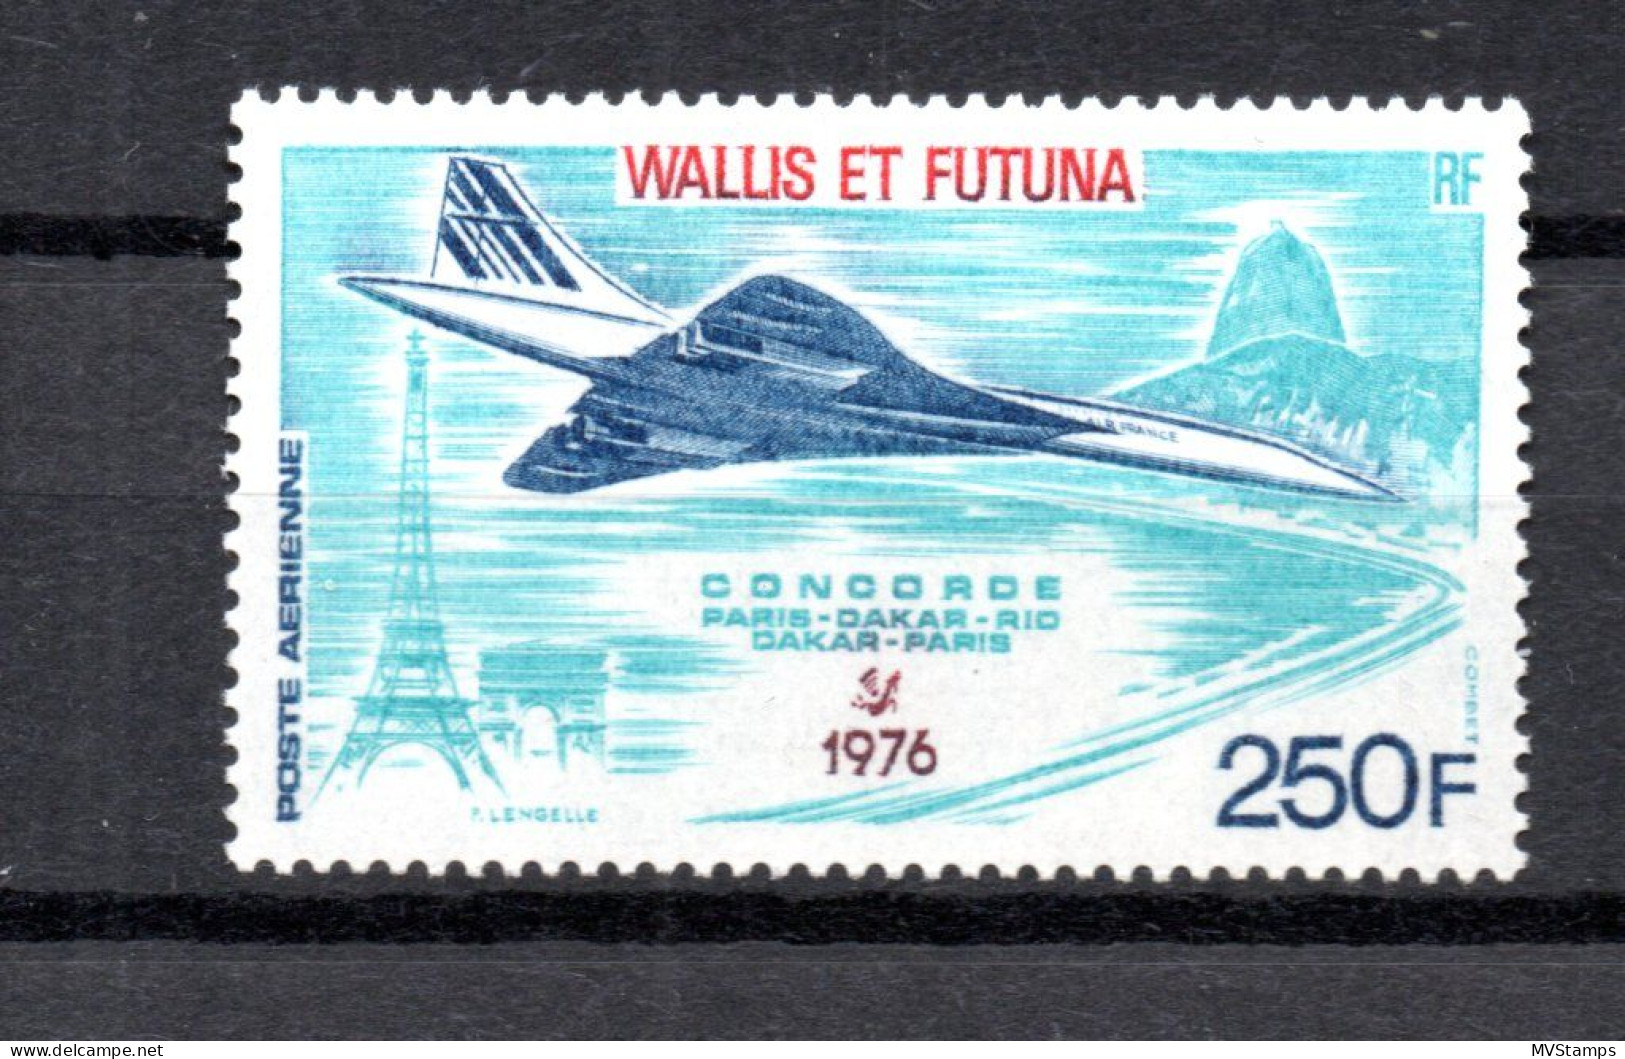 Wallis Et Futuna  (France) 1976 Concorde/Aviation/airmail Stamp (Michel 274) MNH - Nuovi